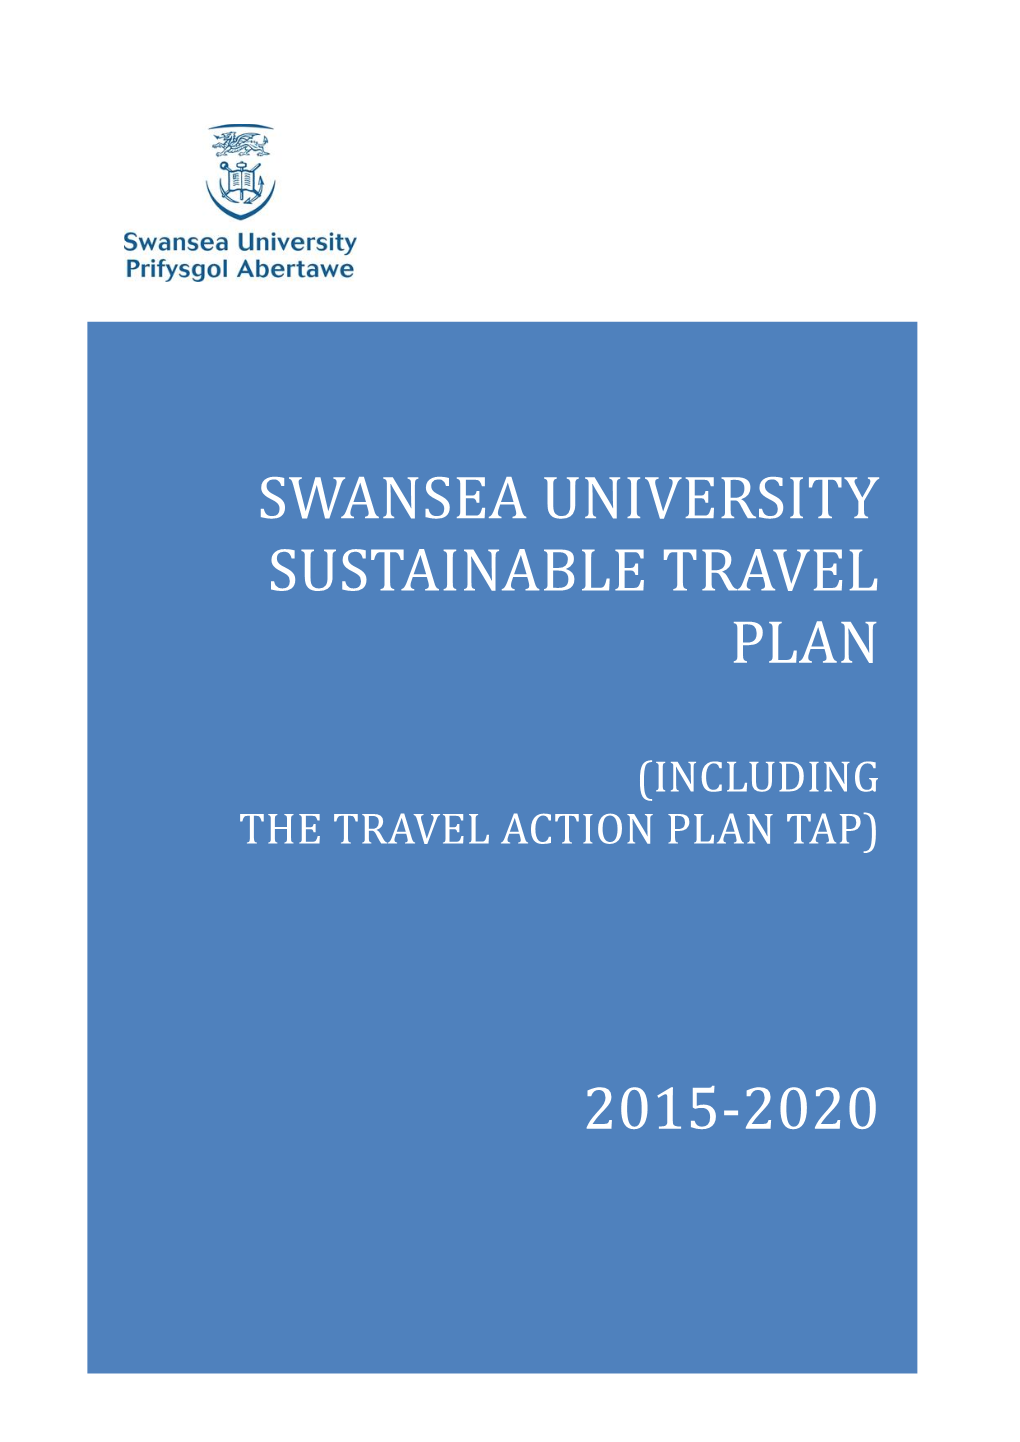 Swansea University Travel Plan 2015